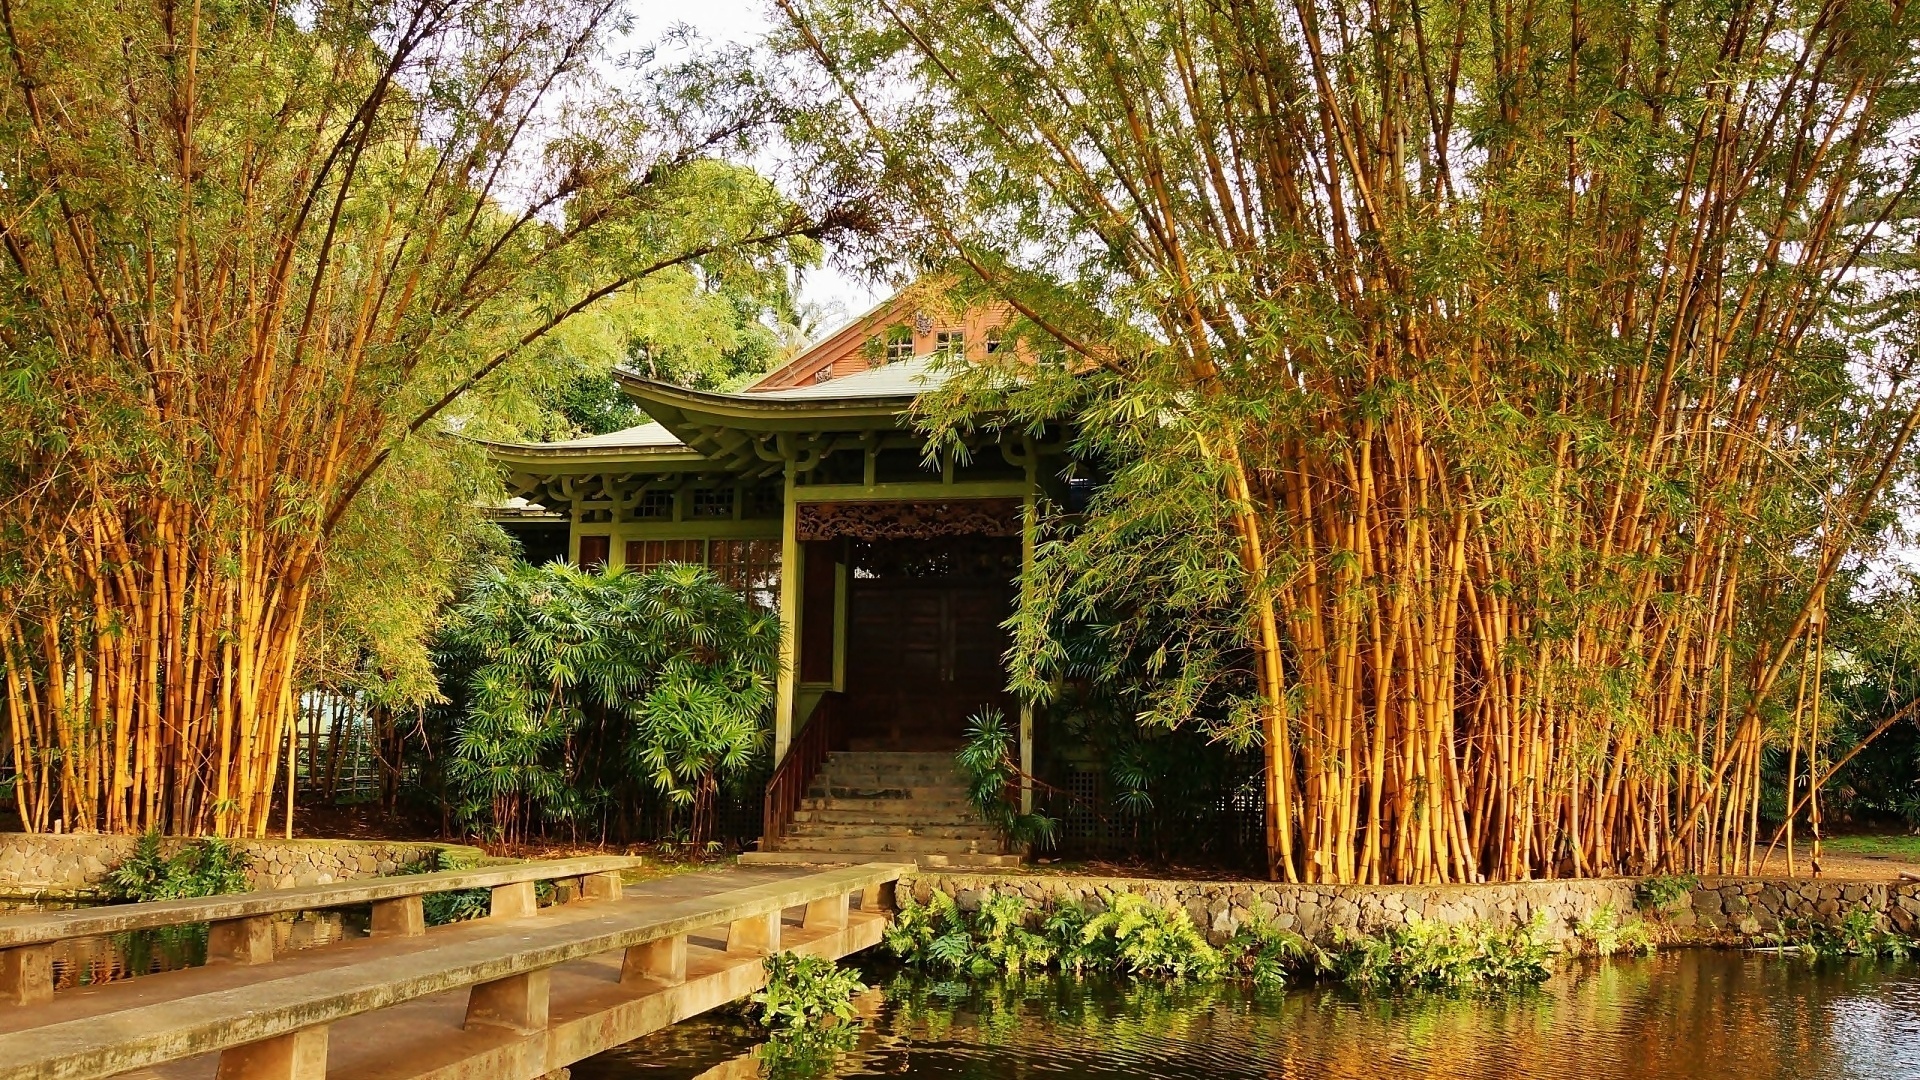 Dom, Ogród, Bambus